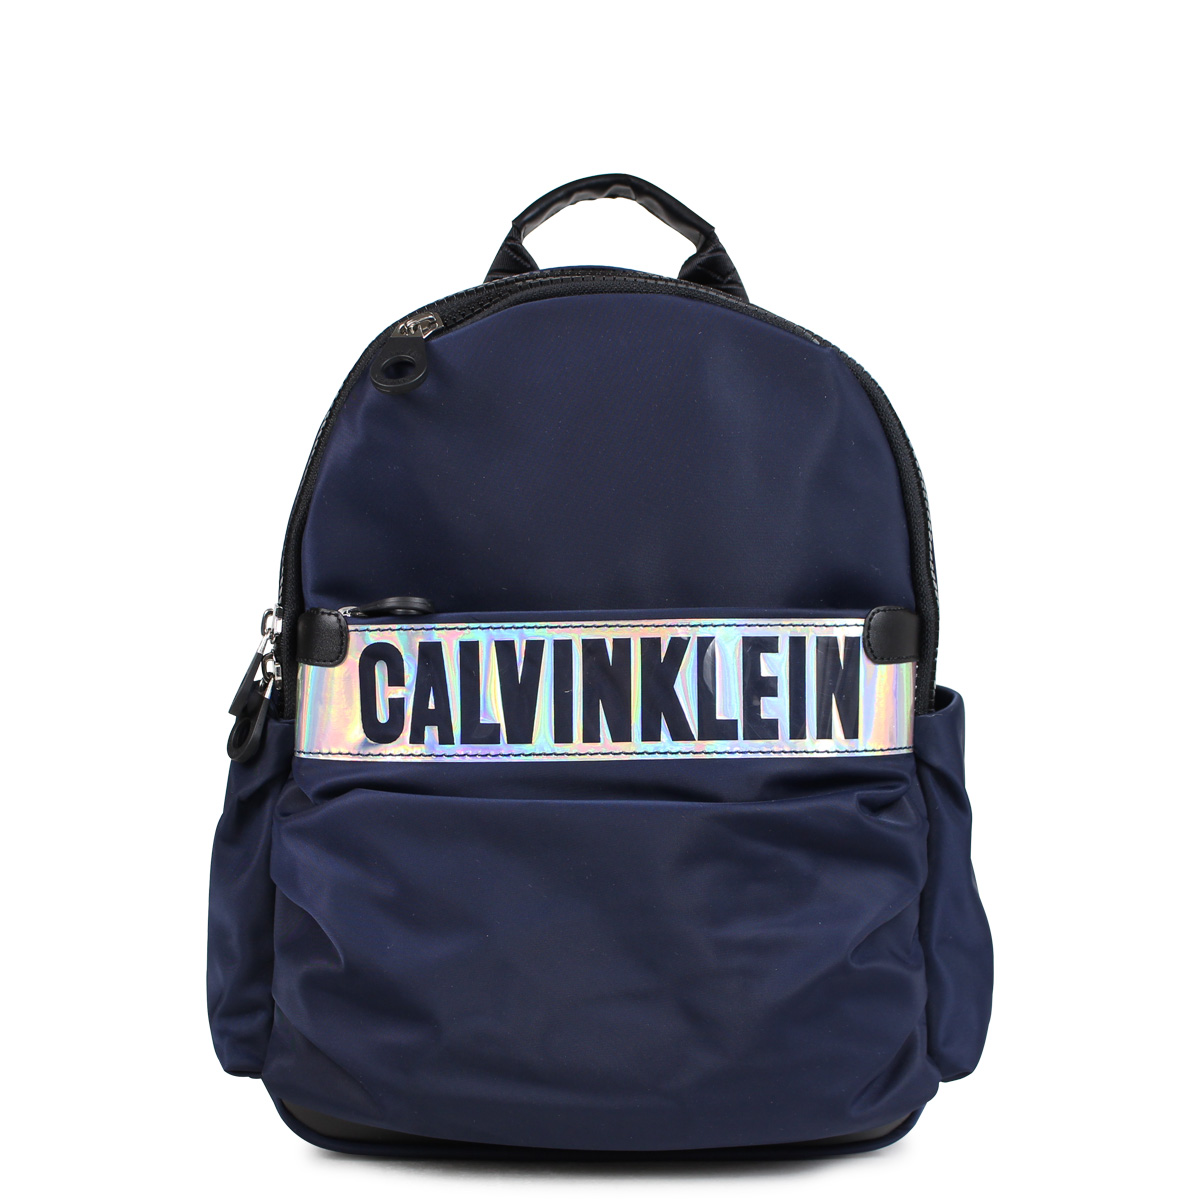 calvin klein bag backpack